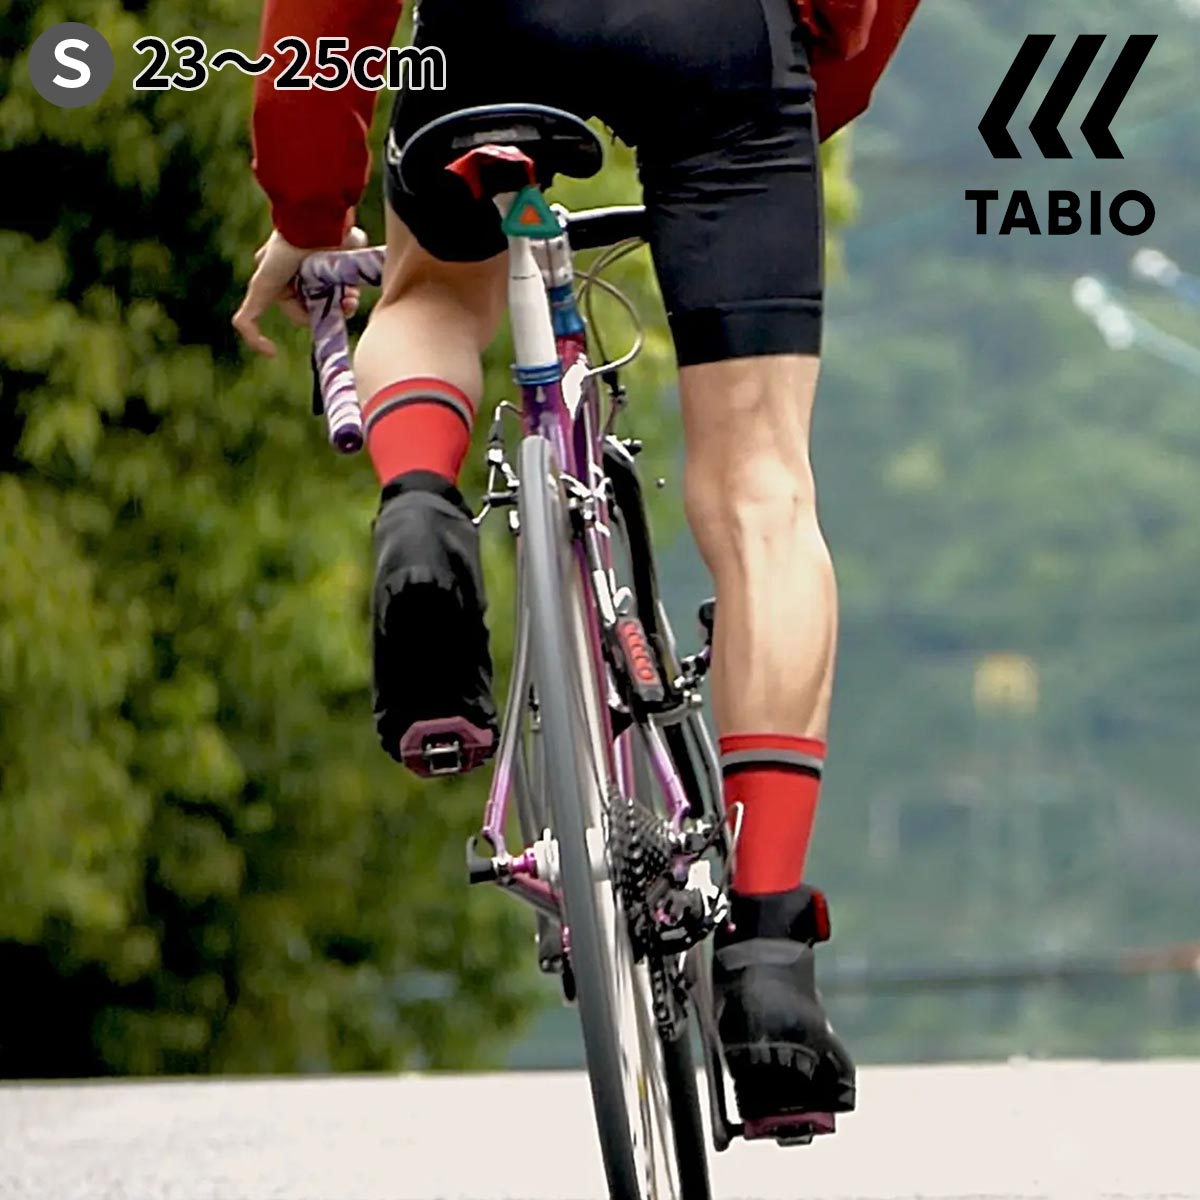  TABIO CYCLE タビオ サイクル Sサイズ / 靴下屋 靴下 タビオ タビオスポーツ くつ下 自転車 サイクル サイクリングウェア クロスバイク ソックス レディース 白 日本製